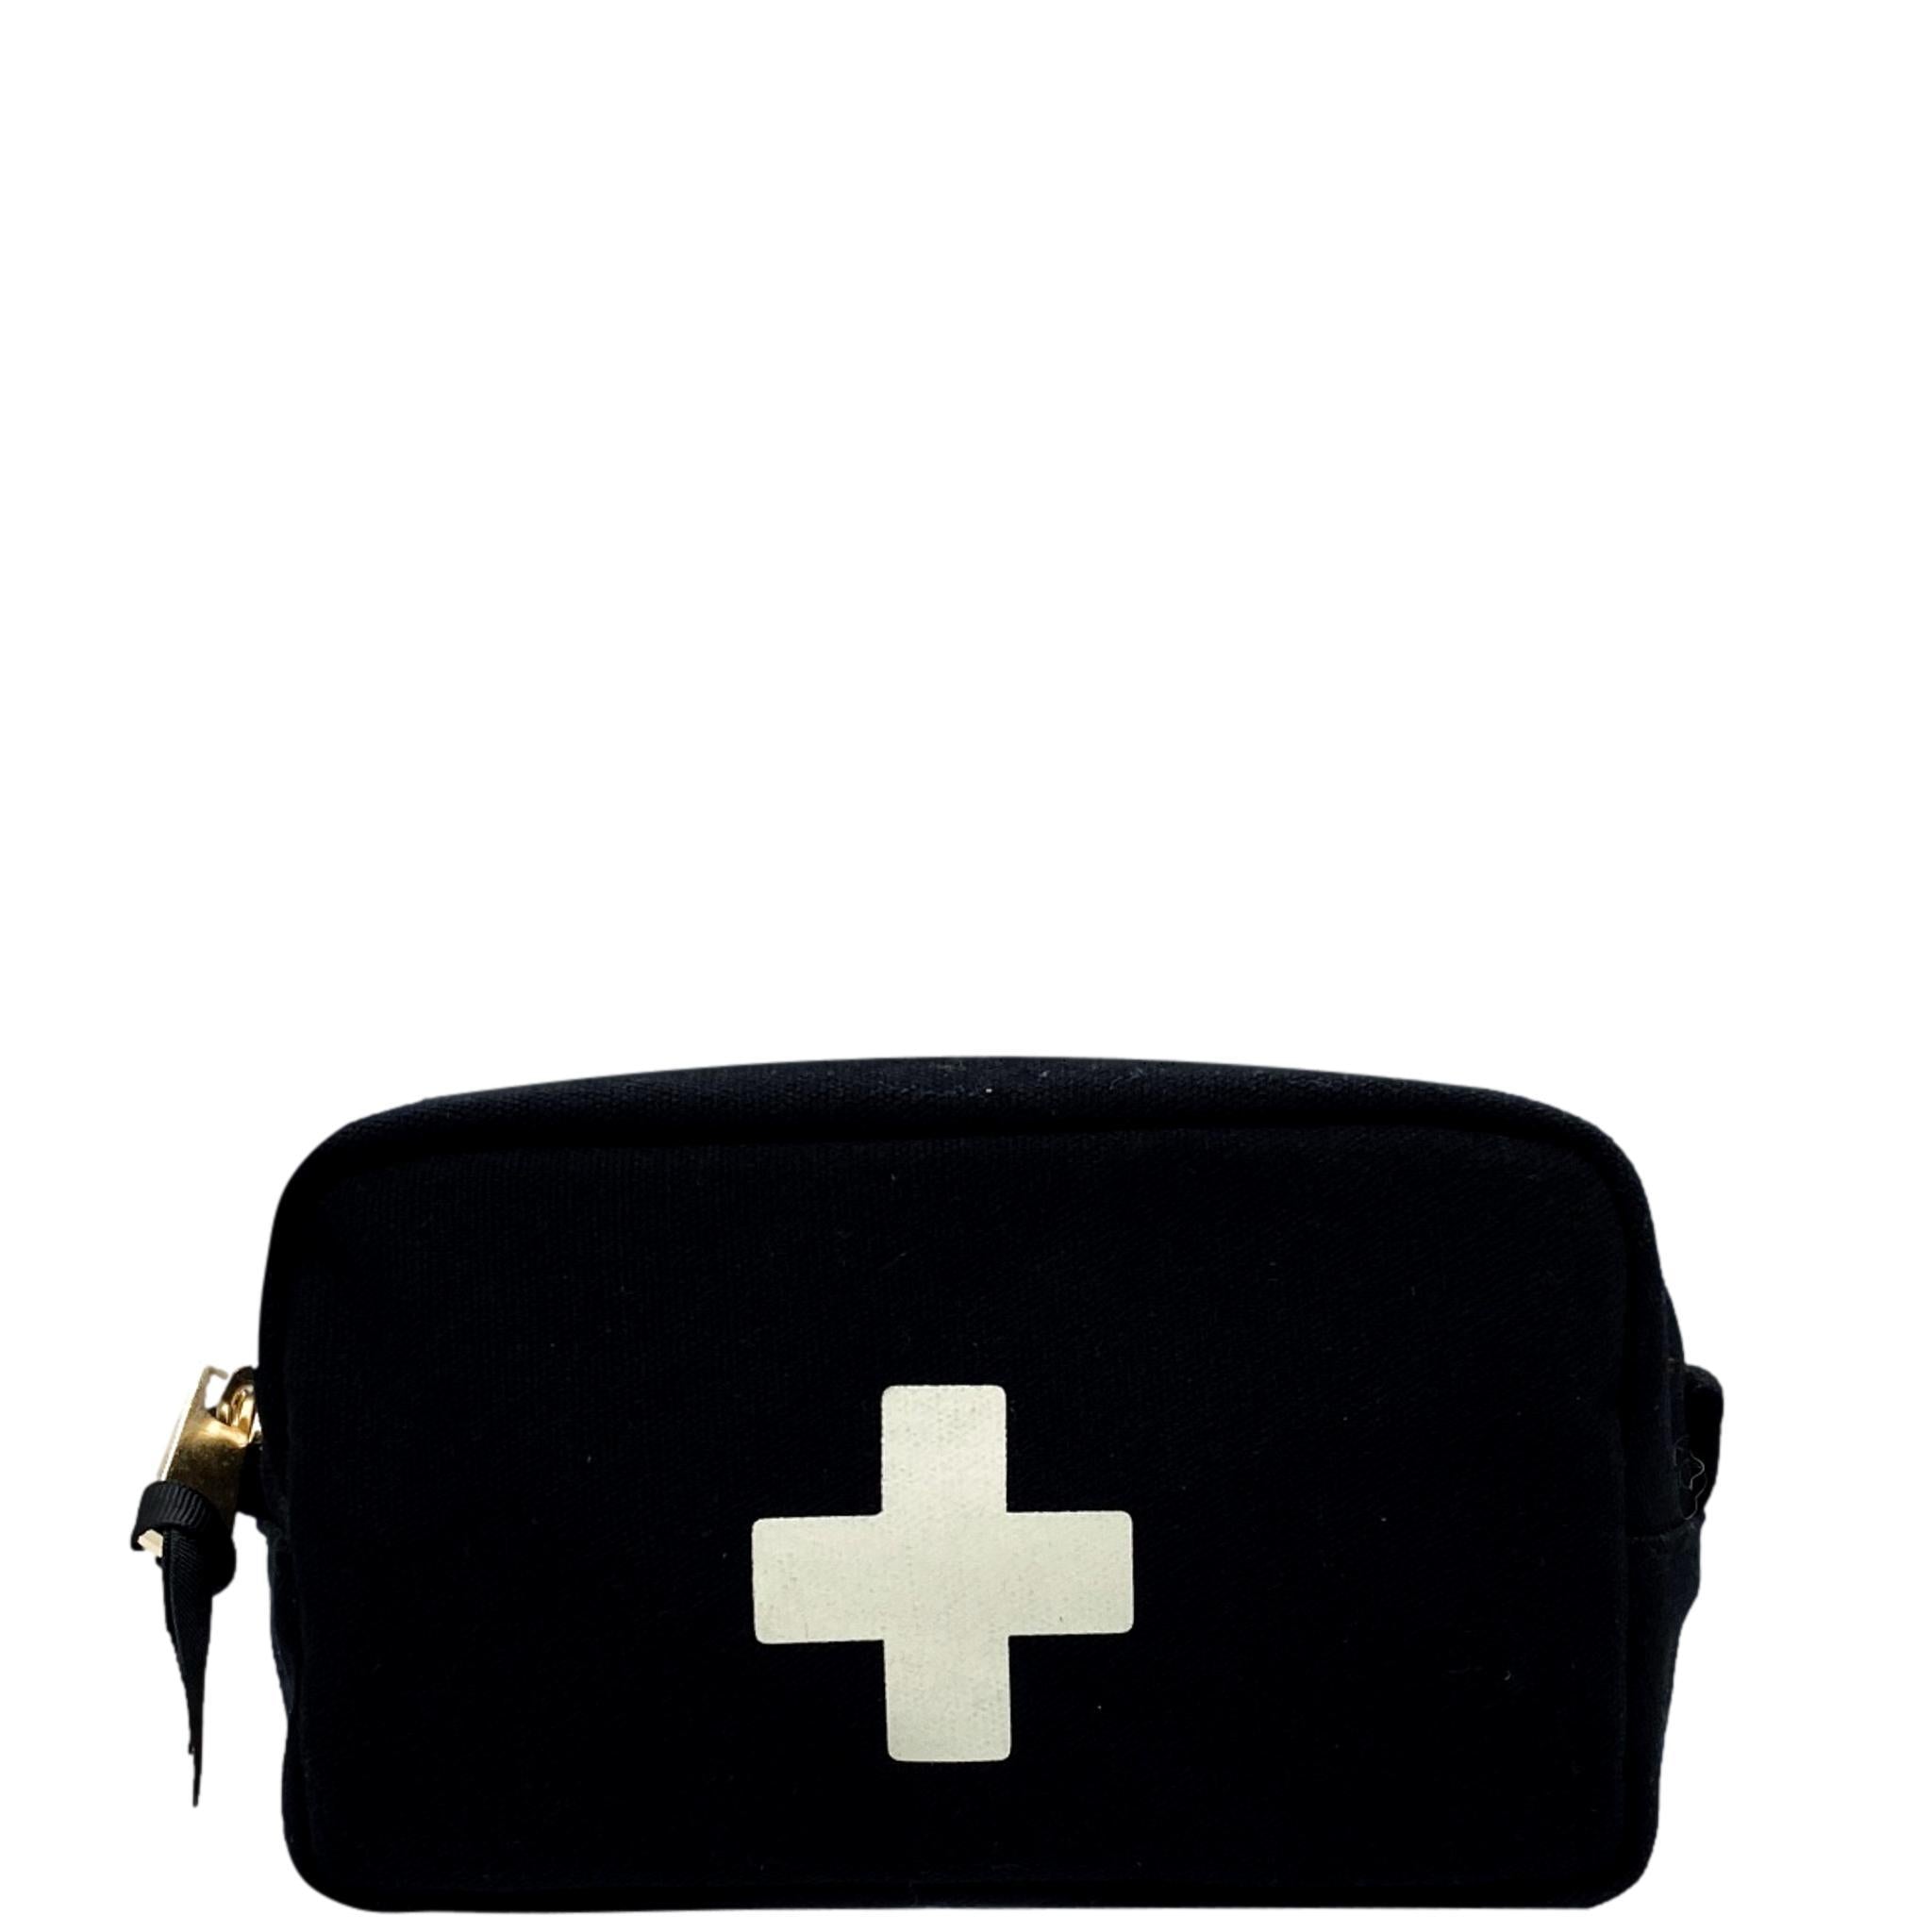 First Aid Organizing Case - Black - Bag-all France